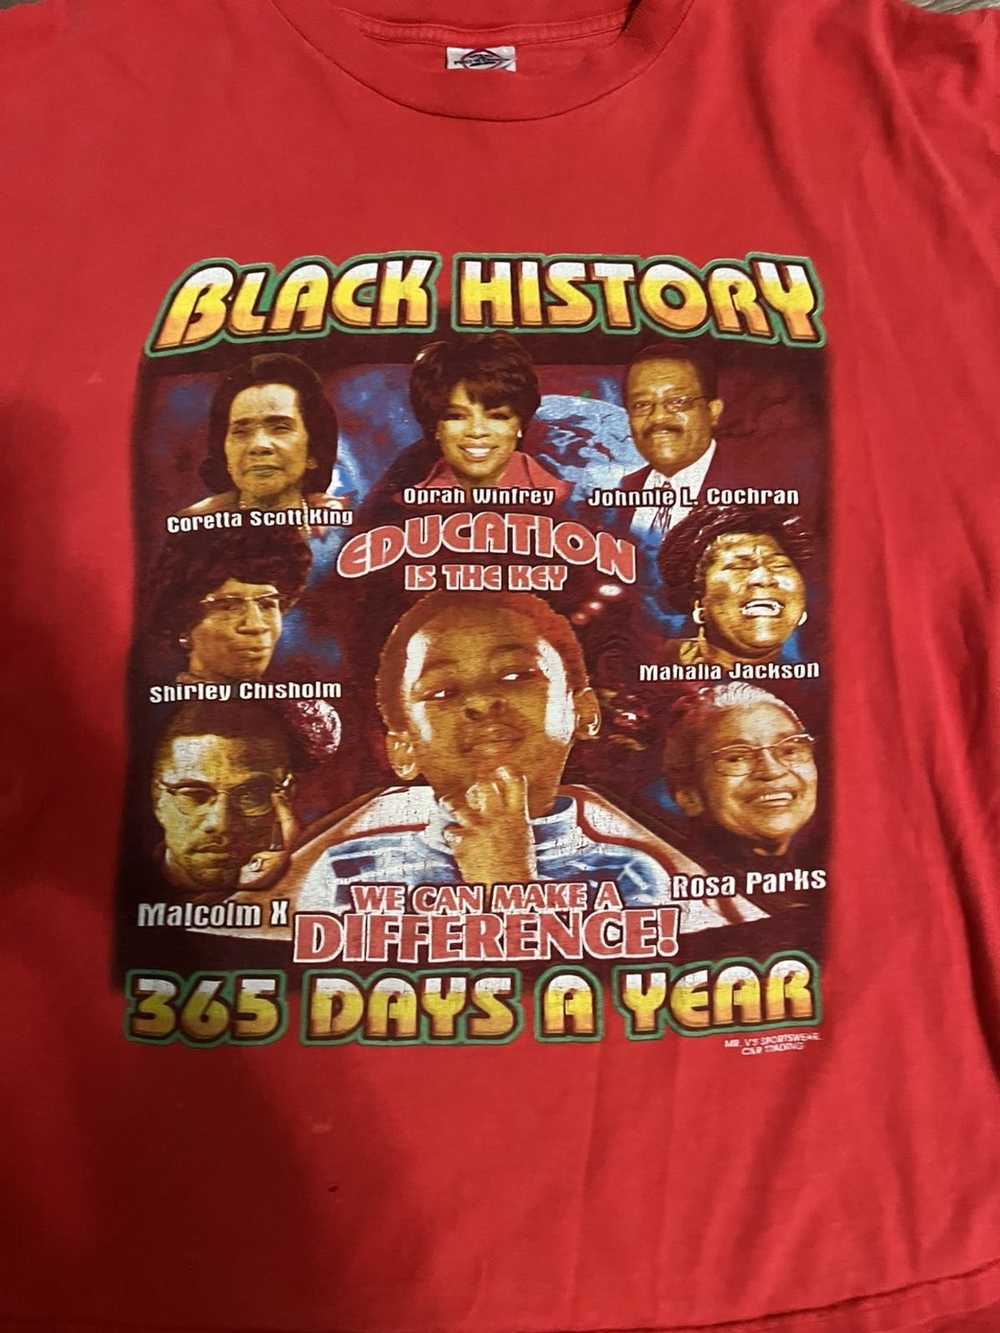 Vintage Red Black History Shirt - image 2